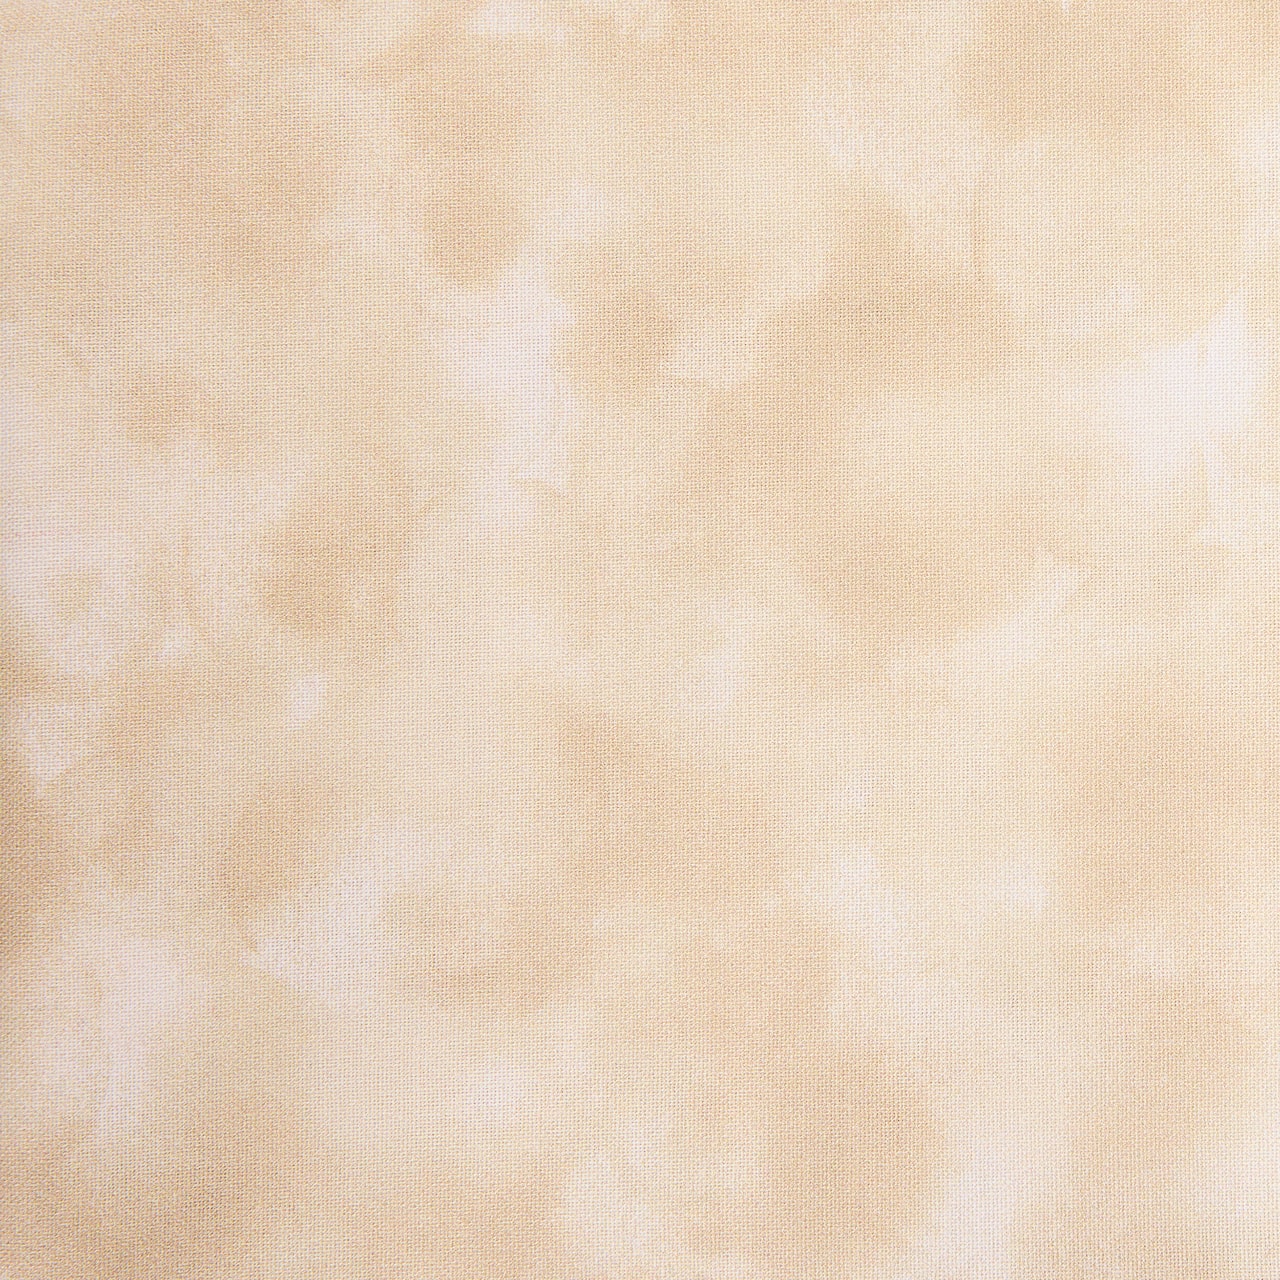 Northcott Impressions Premium Beige Quilt Cotton Fabric